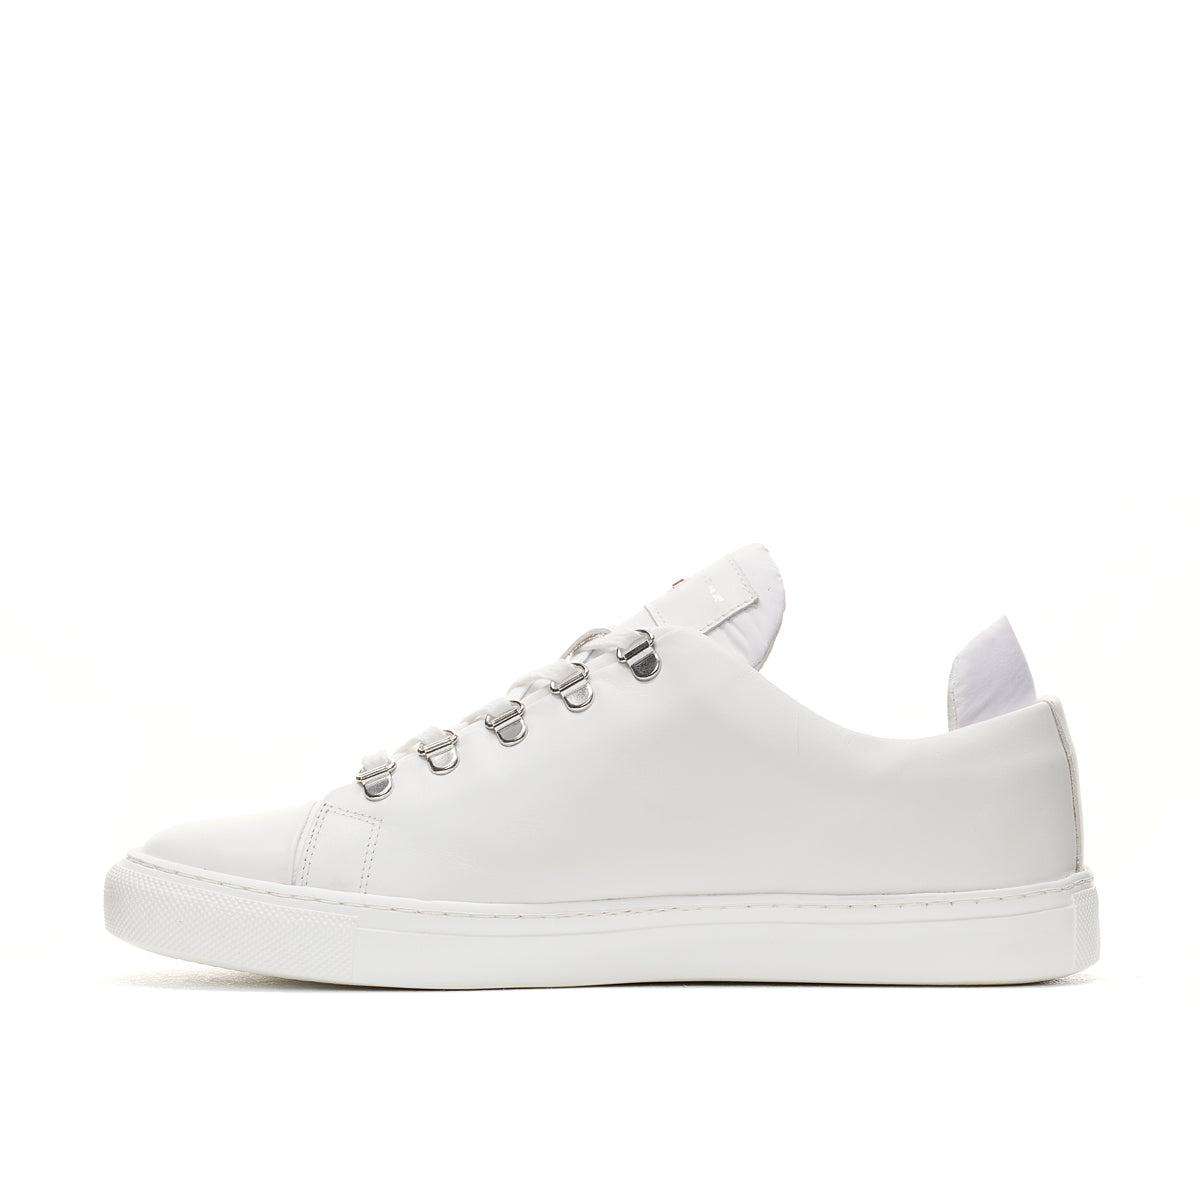 Avila - White (Casual/Lifestyle Shoe)